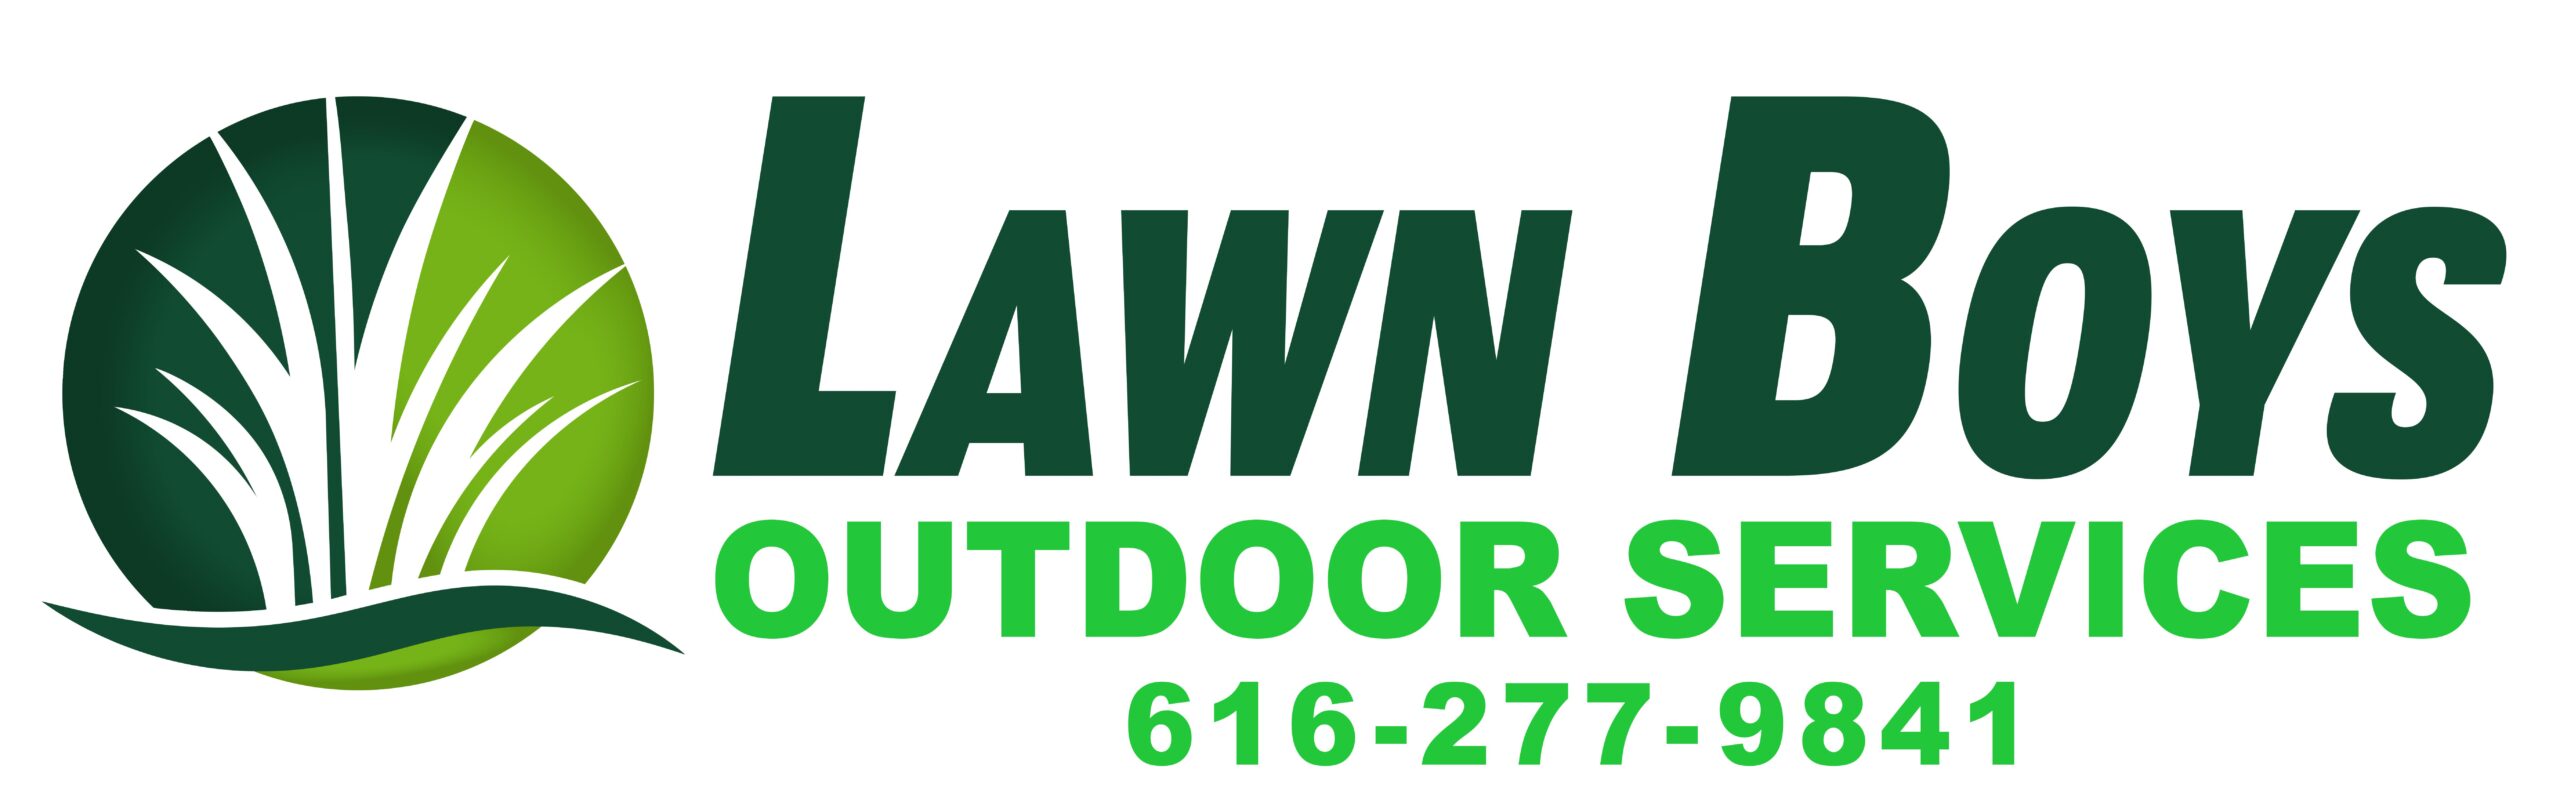 Lawn Boys Outdoor Services